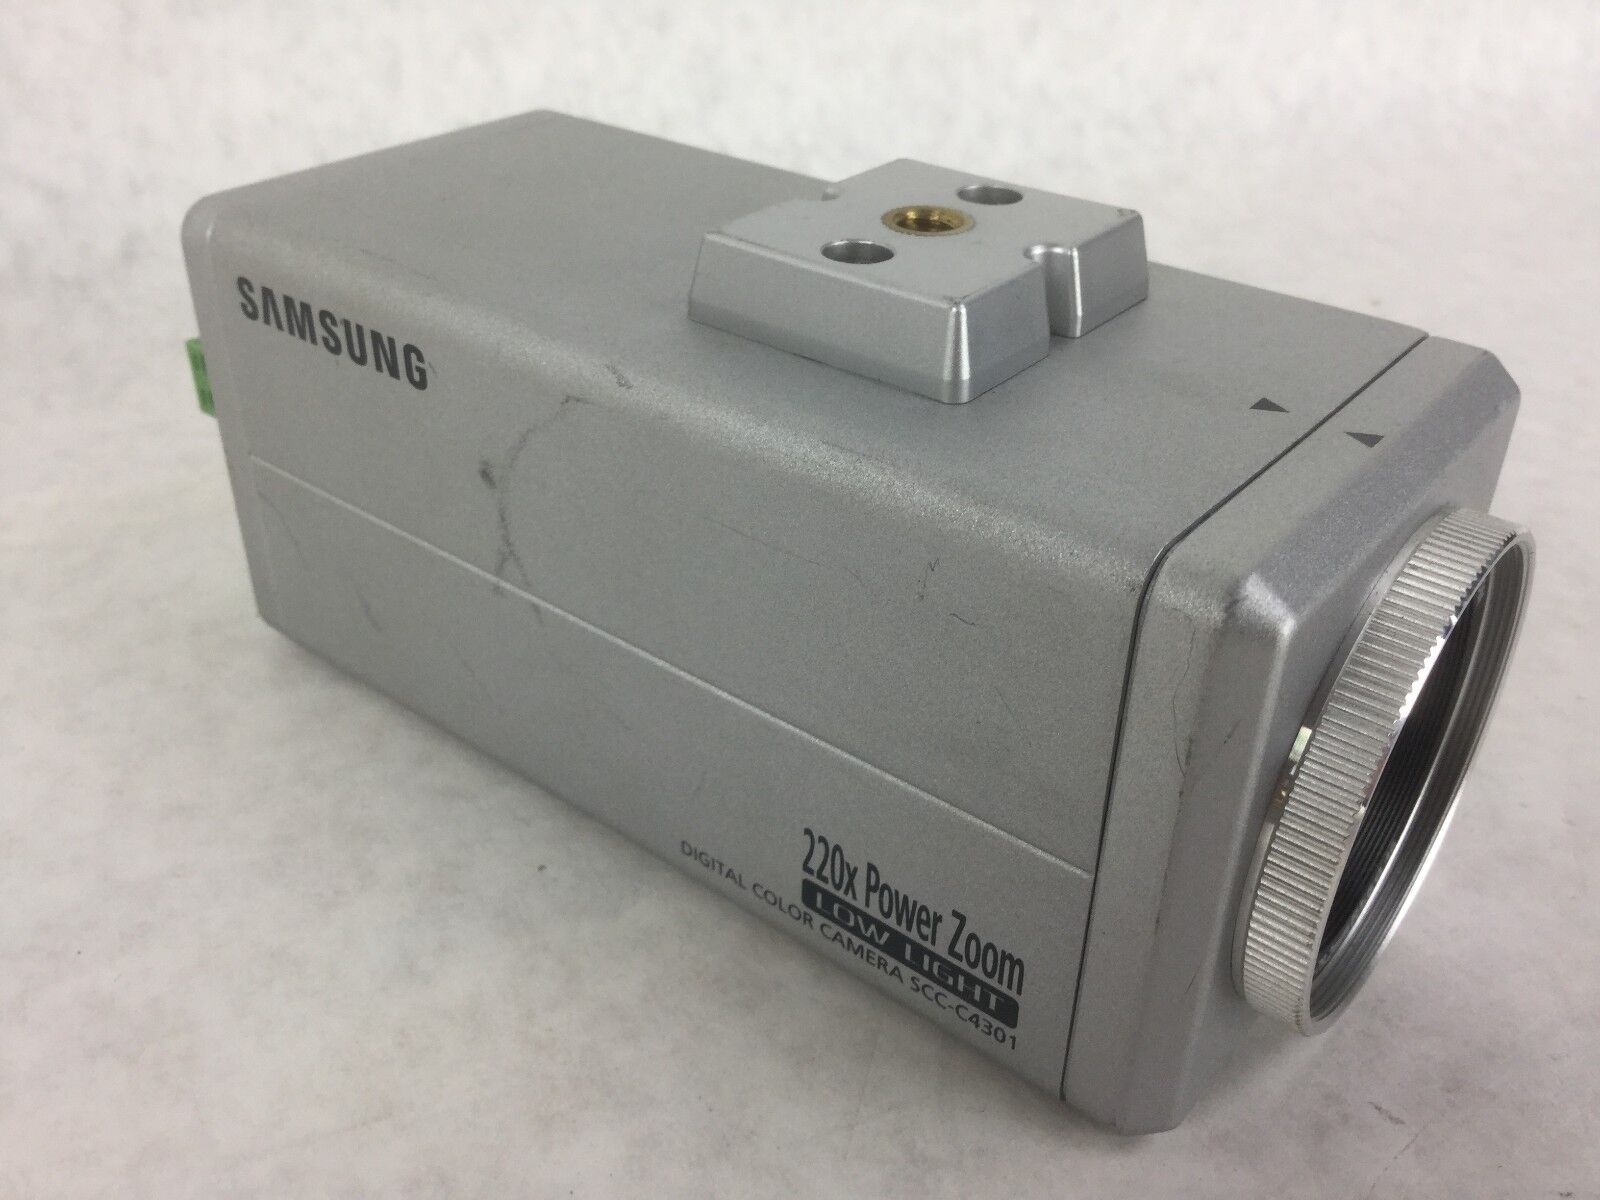 SAMSUNG Low Light Digital Color Surveillance Camera SCC-C4301, No Cap